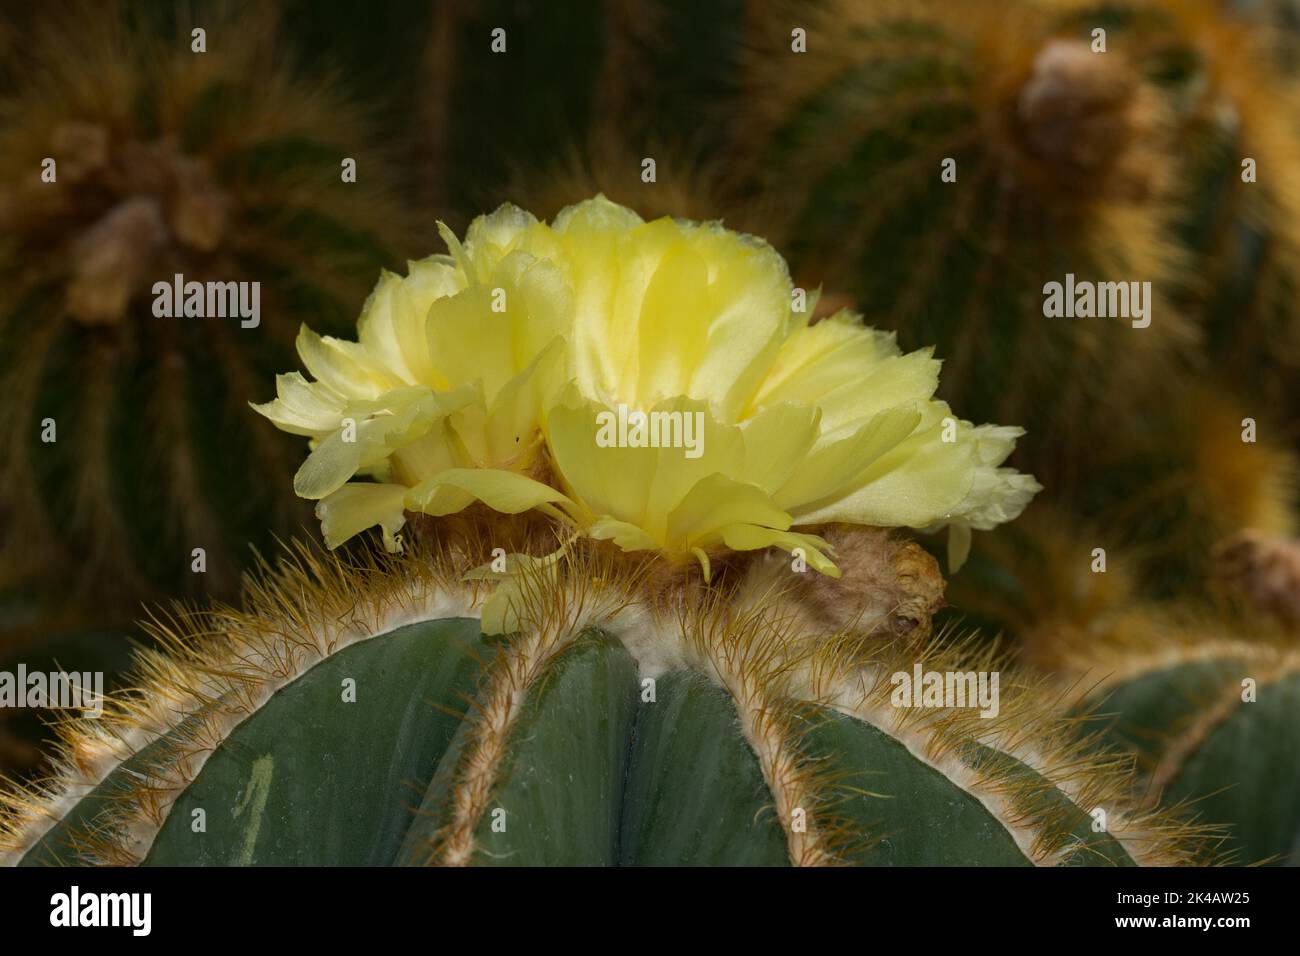 Cactus Parodia magnifica sulphur yellow flower Stock Photo